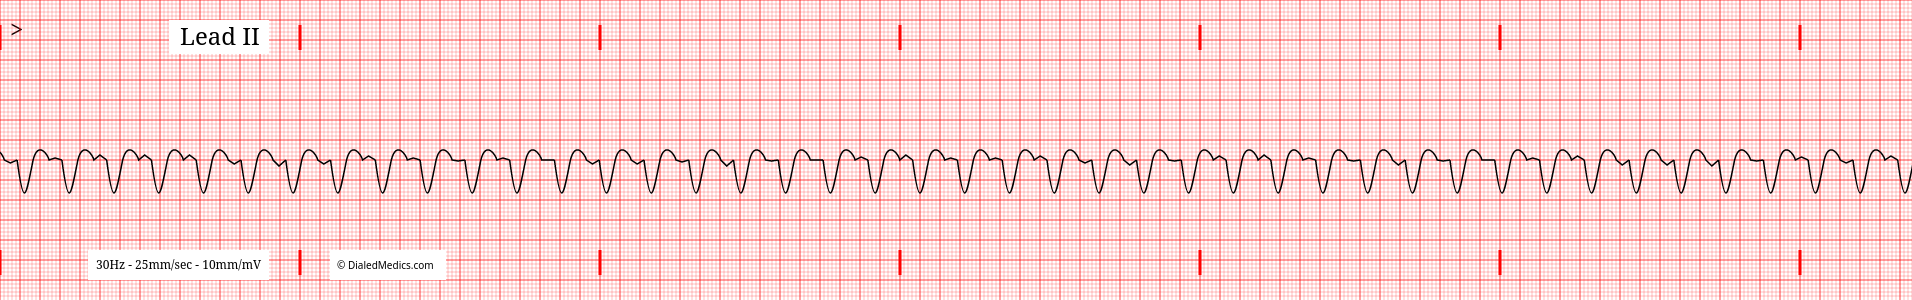 A typical Ventricular Tachycardia EKG tracing.